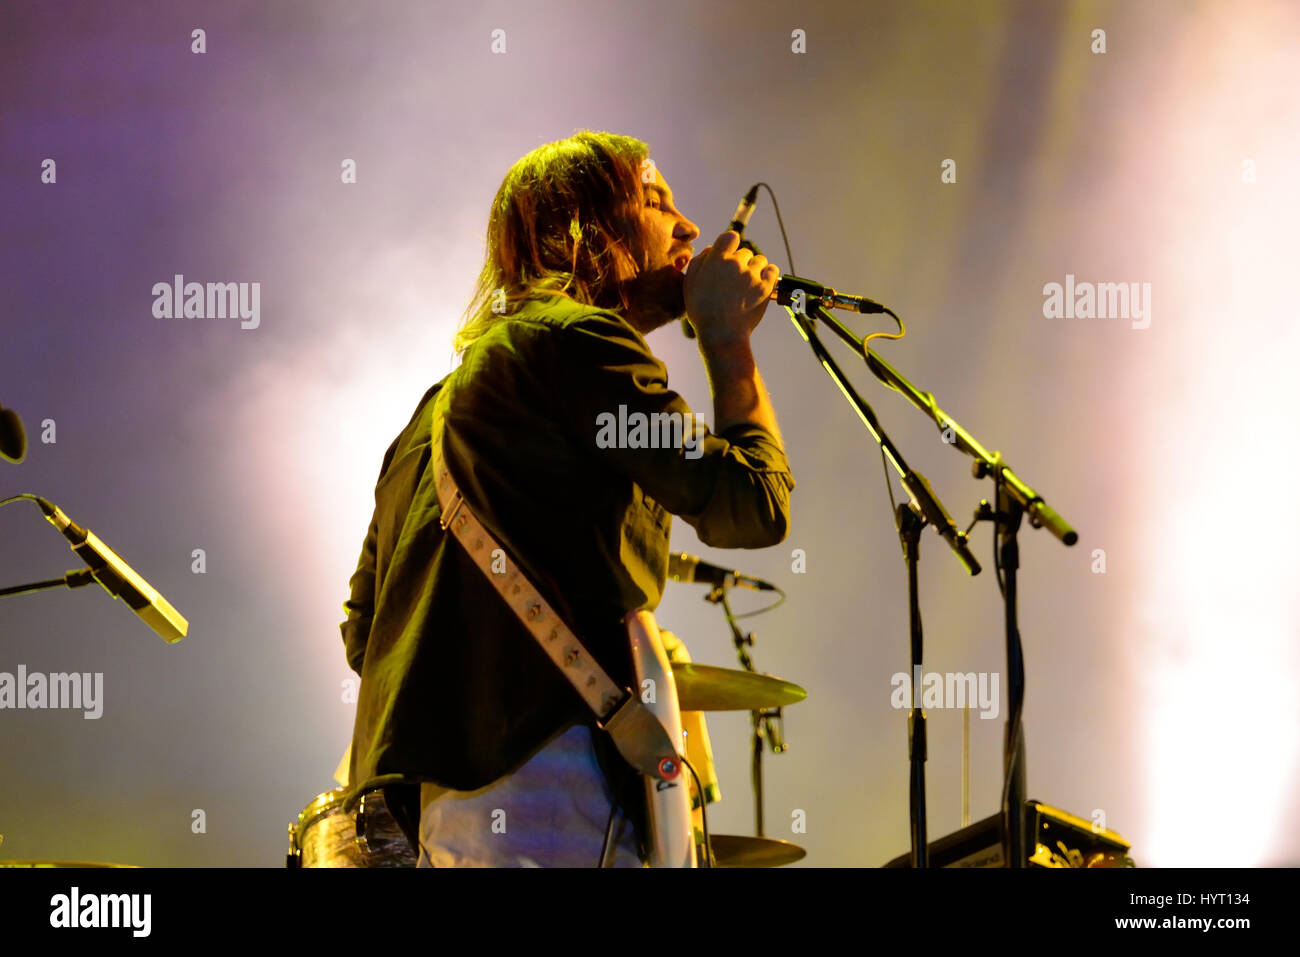 BARCELONA - JUN 2: Tame Impala (psychedelic band) perform in concert at Primavera Sound 2016 Festival on June 2, 2016 in Barcelona, Spain. Stock Photo